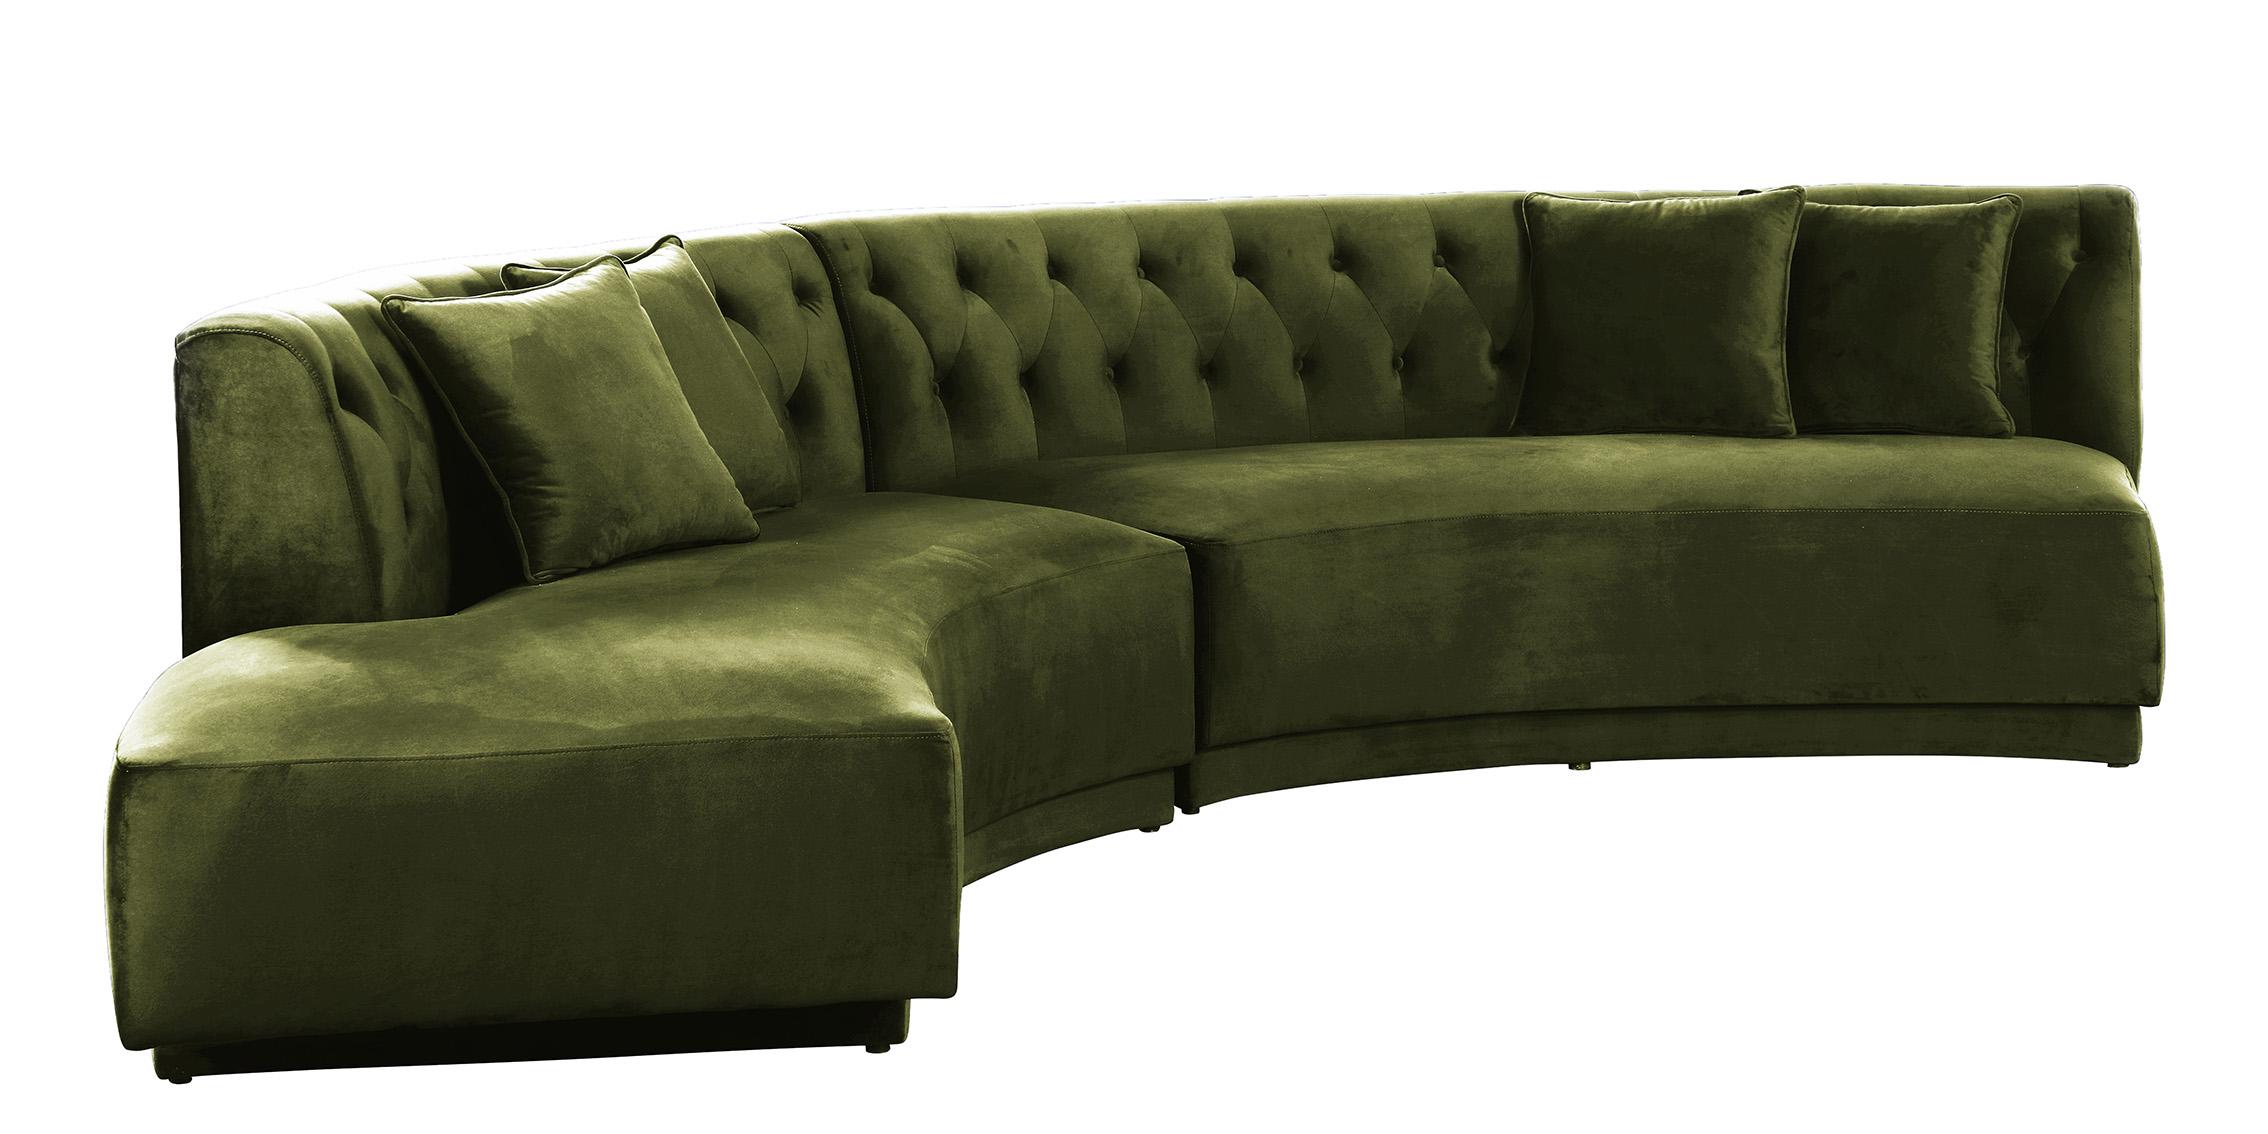 Contemporary, Modern Sectional Sofa KENZI 641Olive 641Olive-Sectional in Green Velvet